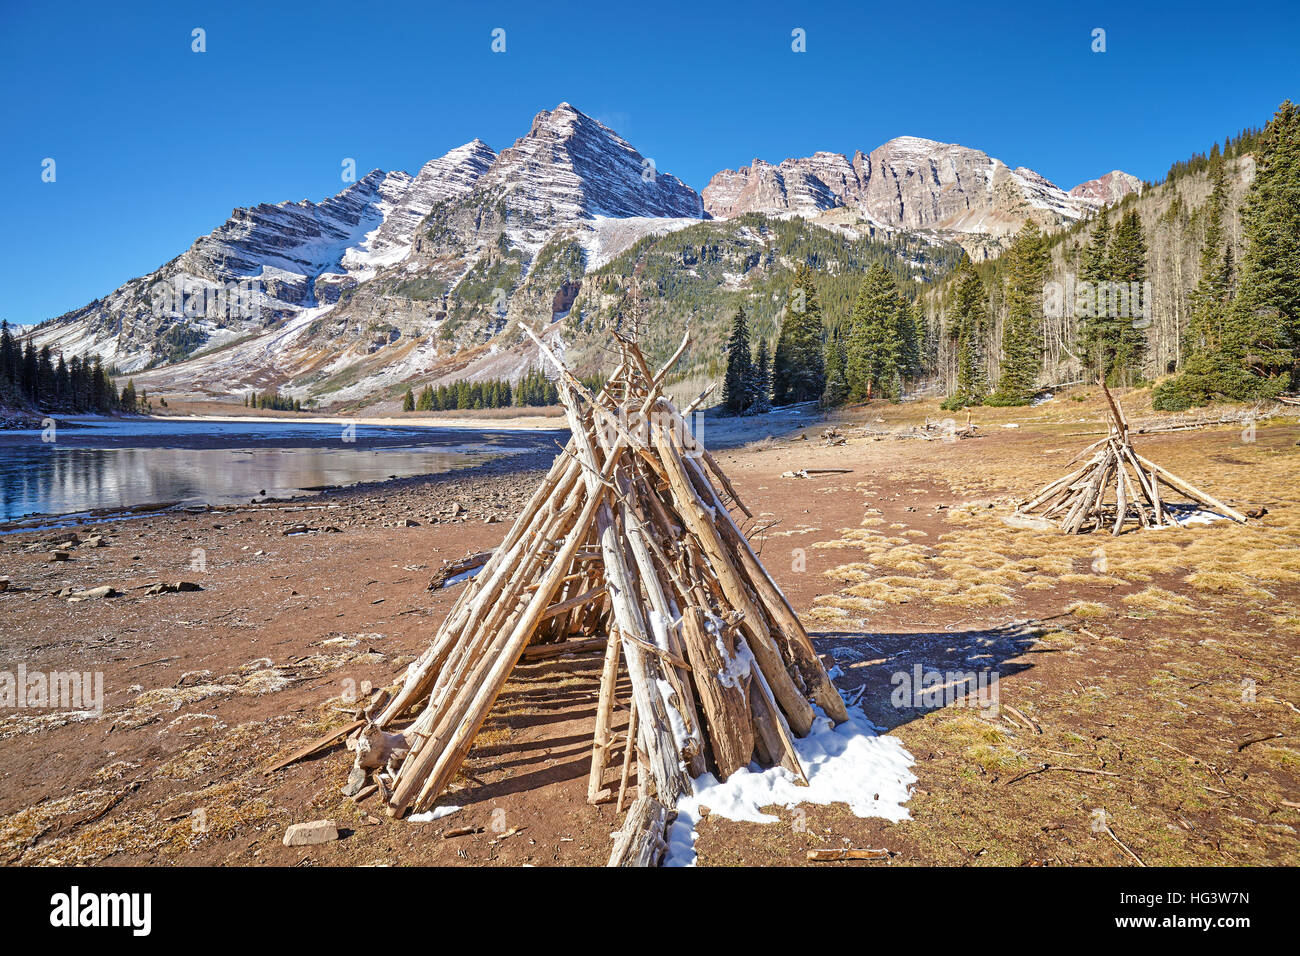 Berg-Campingplatz mit vorbereiteten Lagerfeuer am Maroon Bells, Aspen in Colorado, USA. Stockfoto